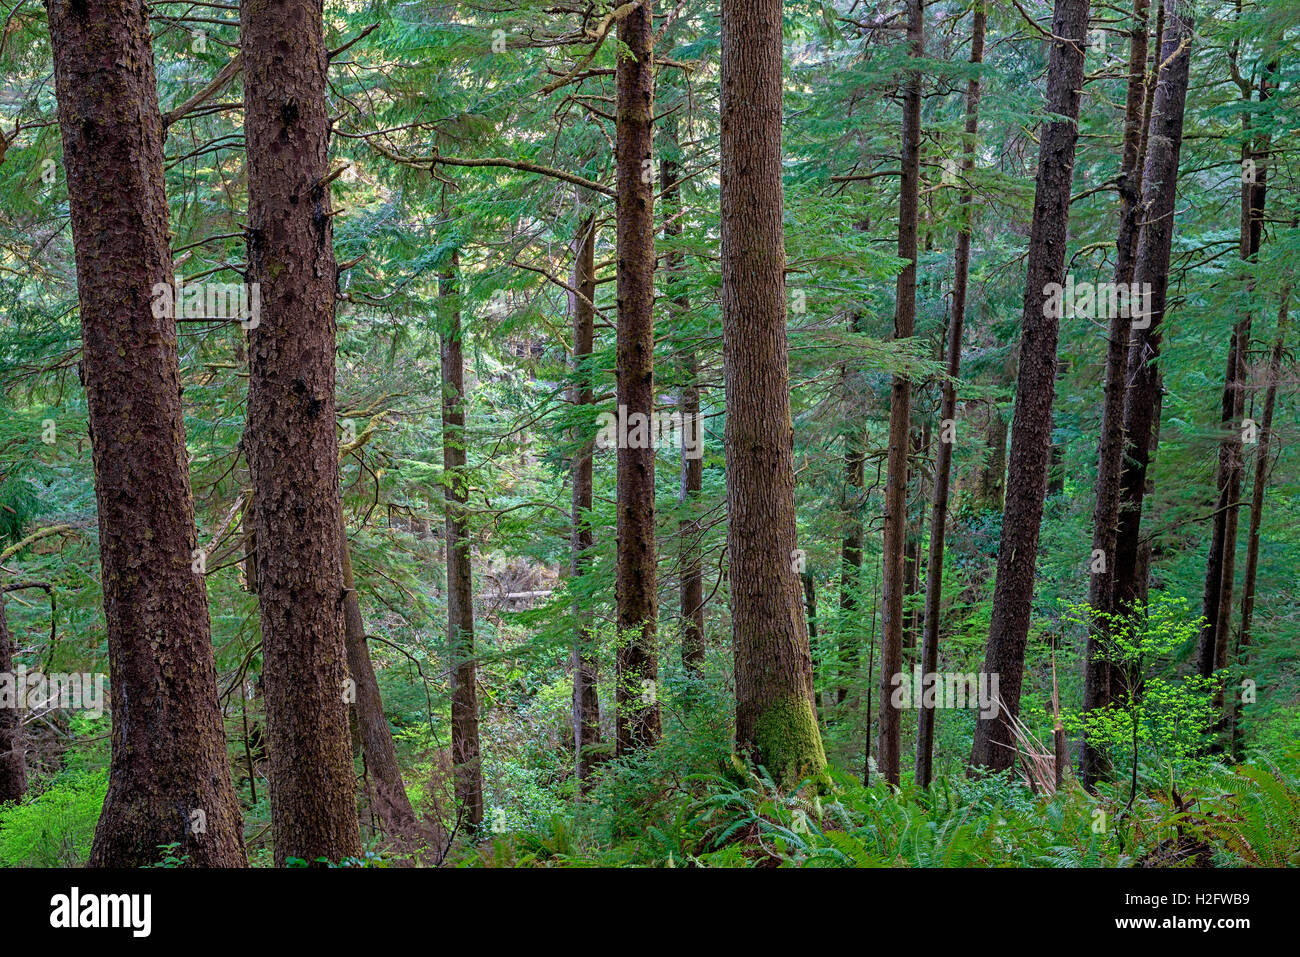 USA, Oregon, Oswald West State Park. Coastal rainforest of Sitka spruce and western hemlock. Stock Photo